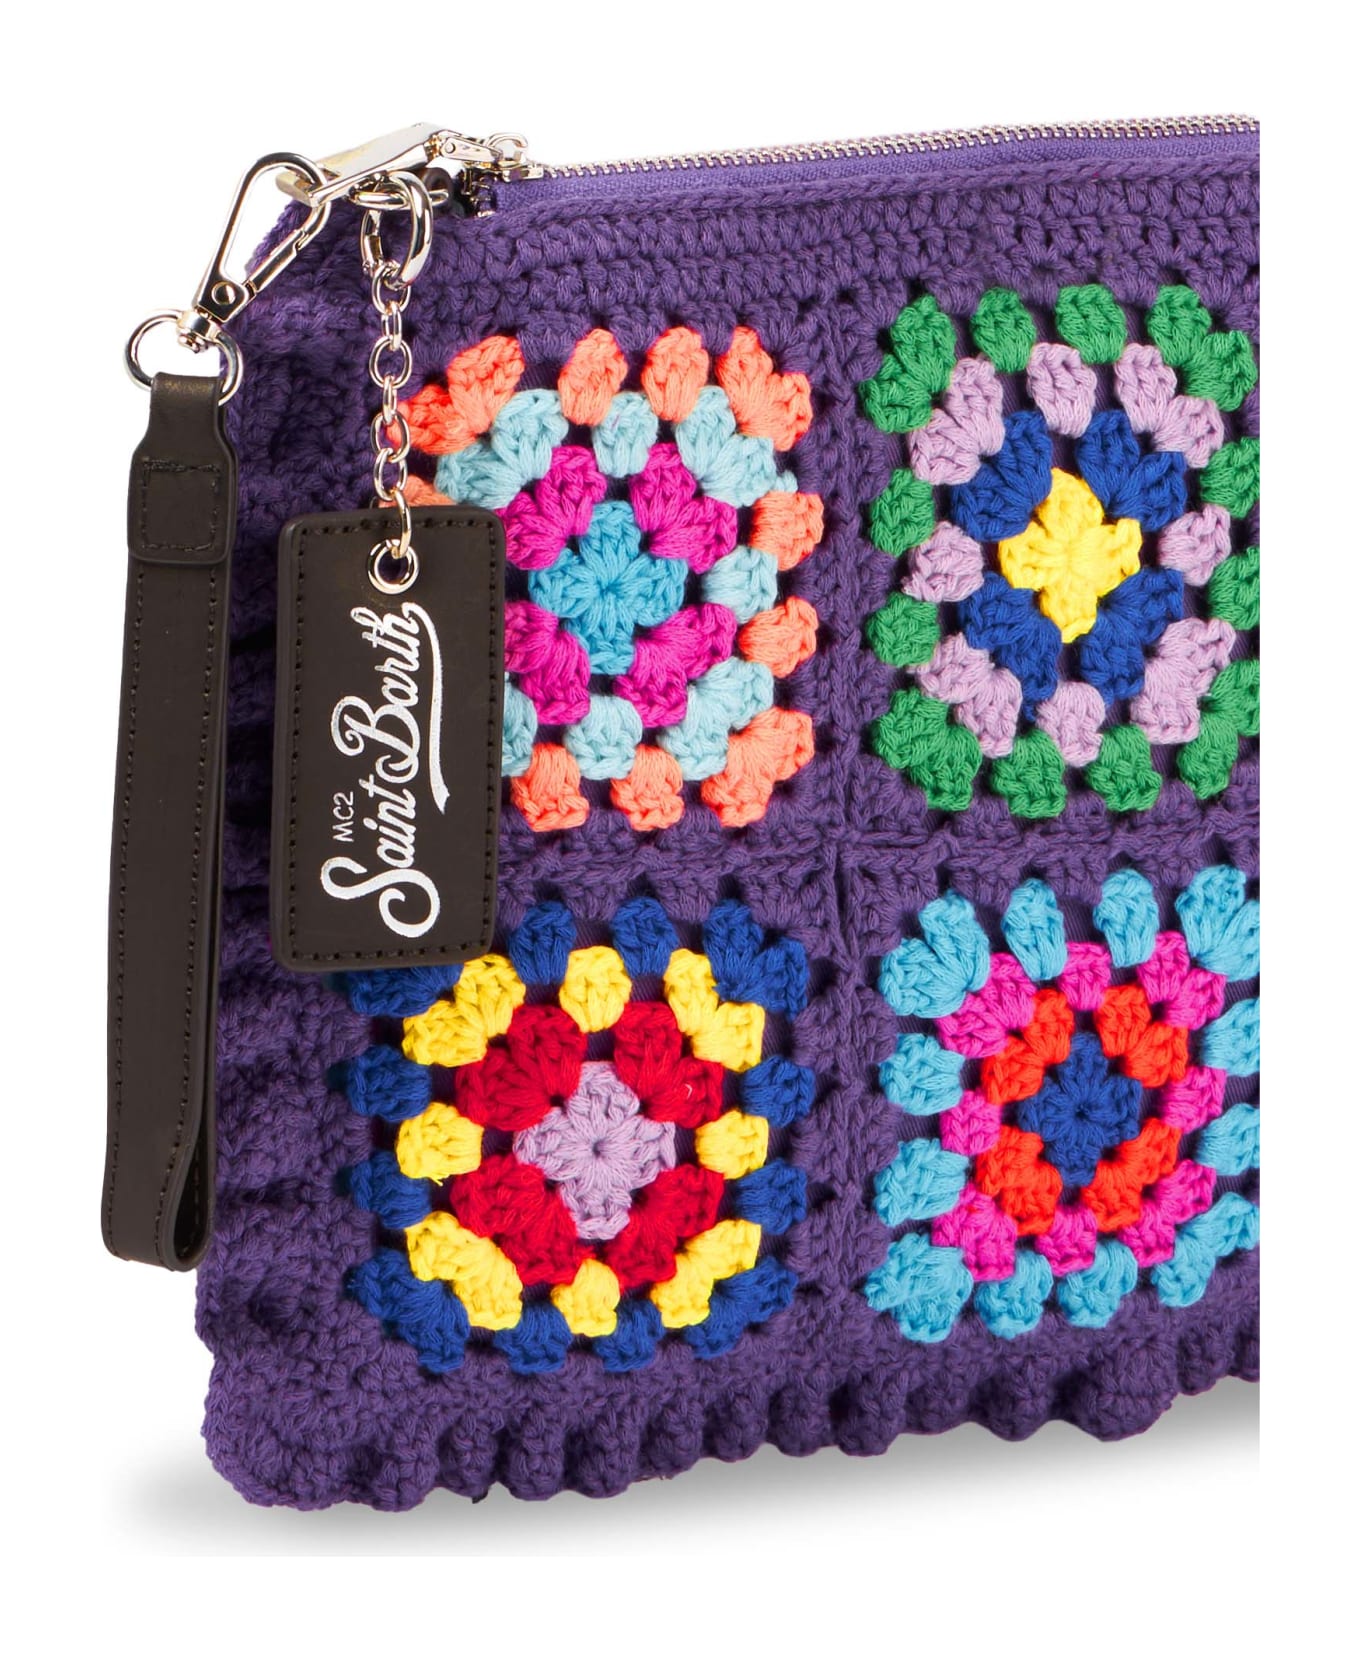 MC2 Saint Barth Parisienne Violet Crochet Crossbody Bag - PINK